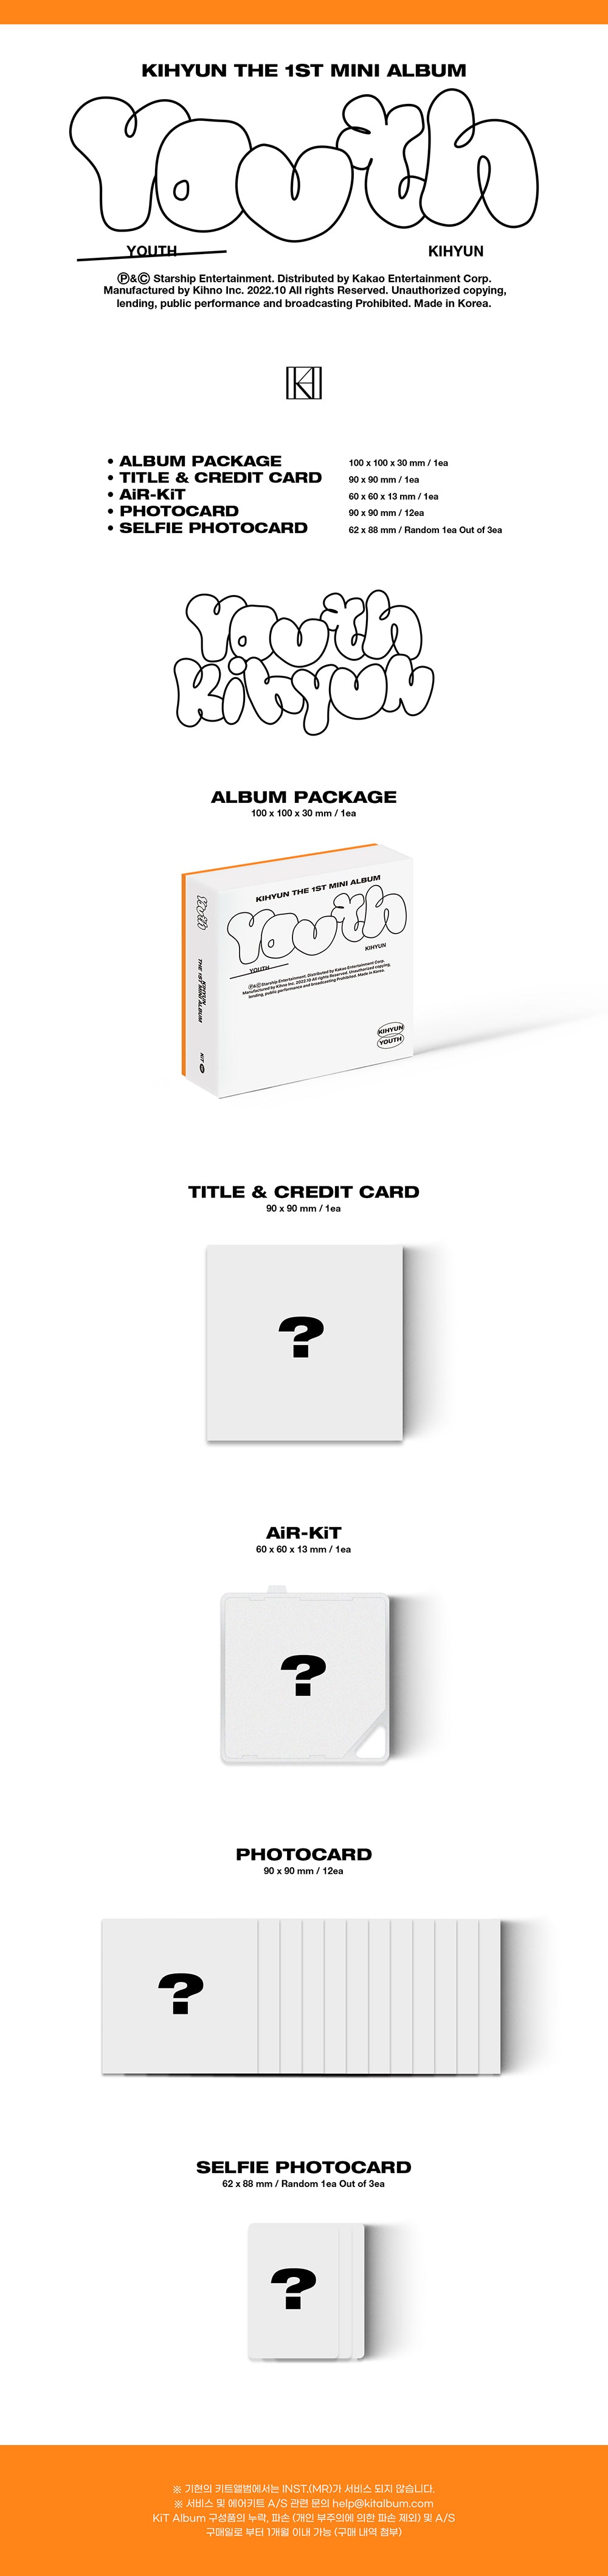 KIHYUN (MONSTA X) - YOUTH (أول ألبوم صغير) KiT Album | شركة ديباك